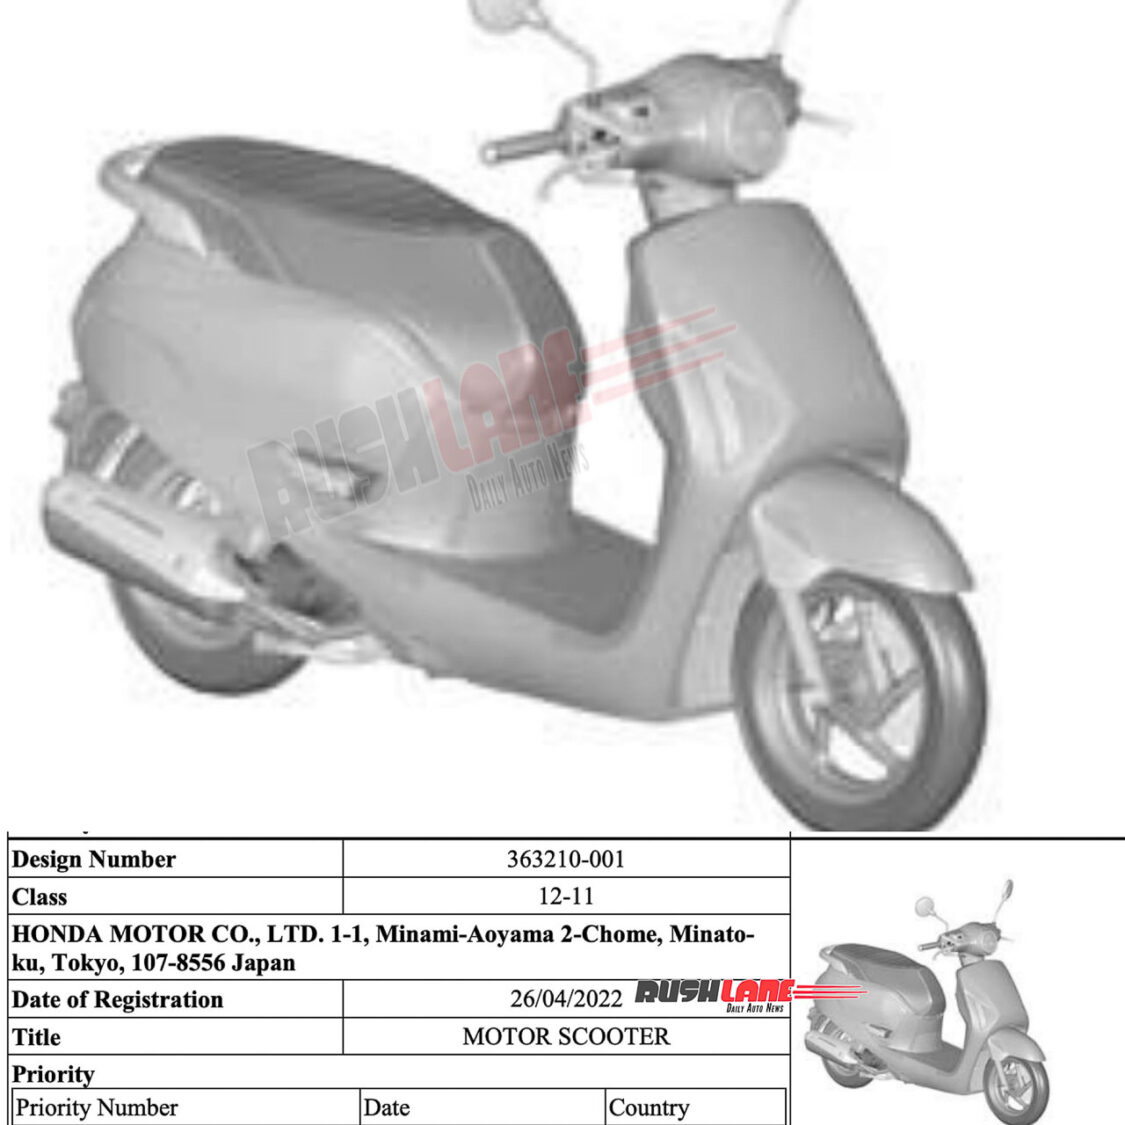 Honda NS125LA patented in India